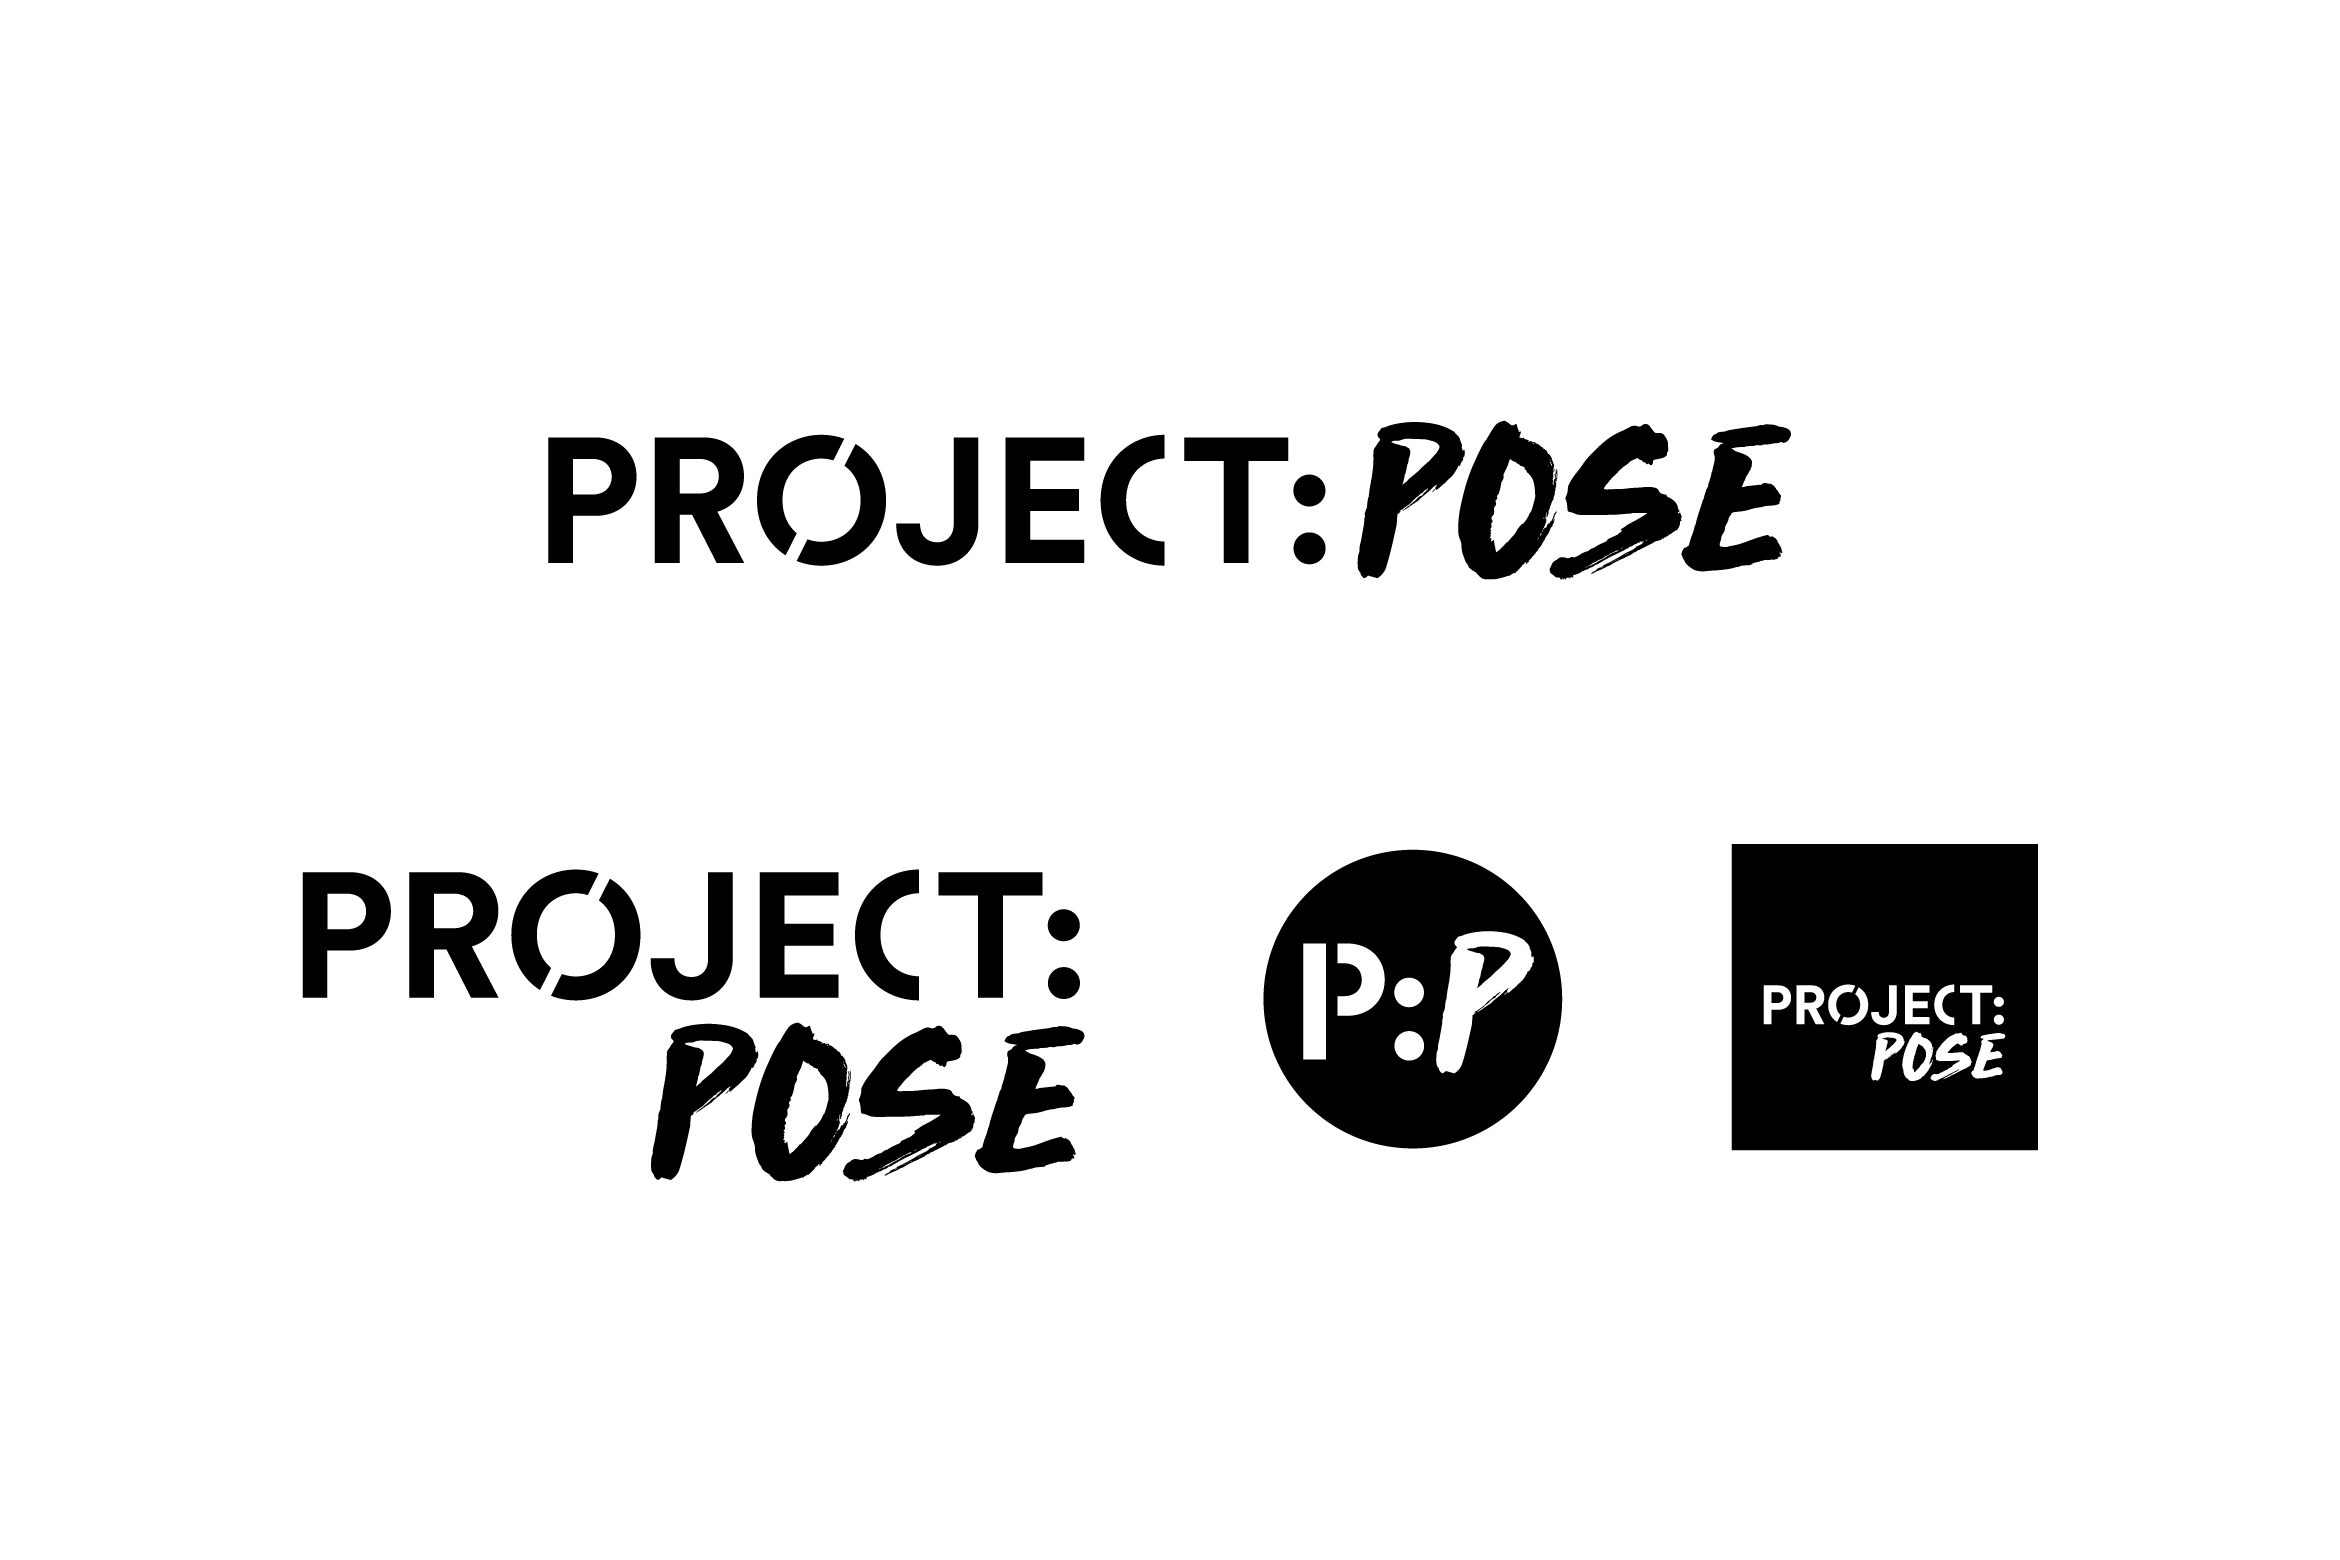 ProjectPose_Logos_1170x780x2